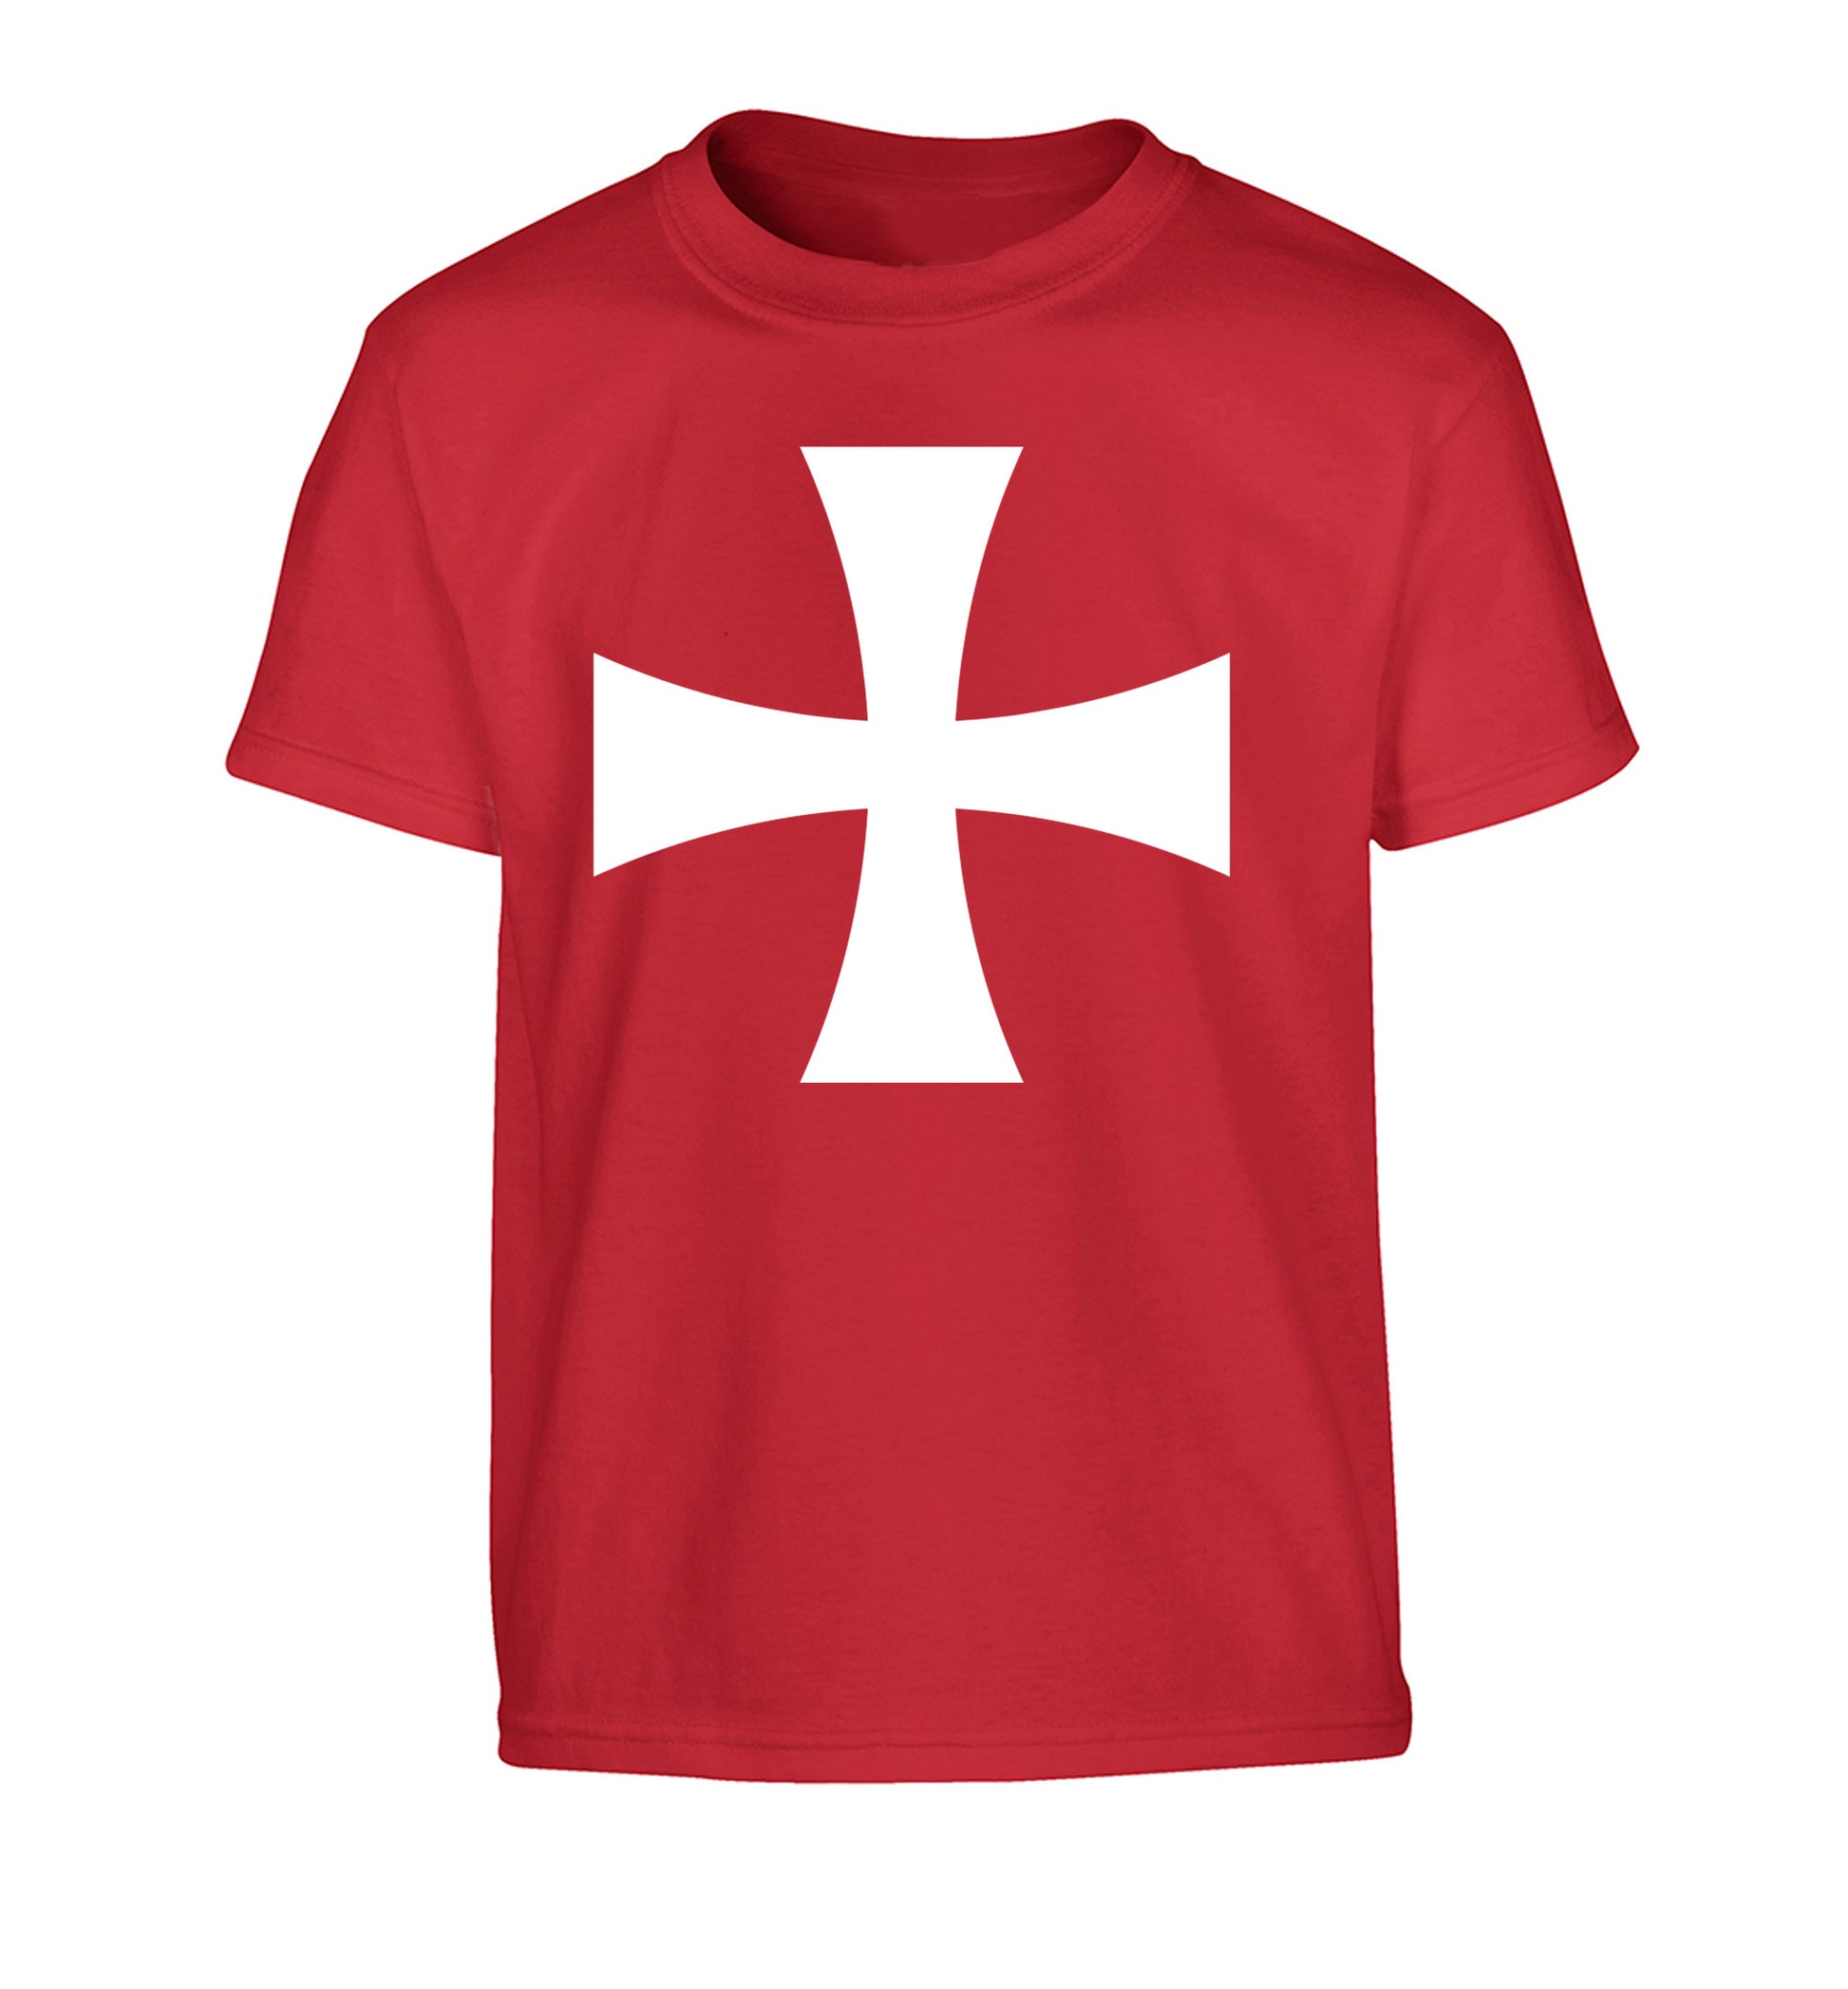 Knights Templar cross Children's red Tshirt 12-14 Years